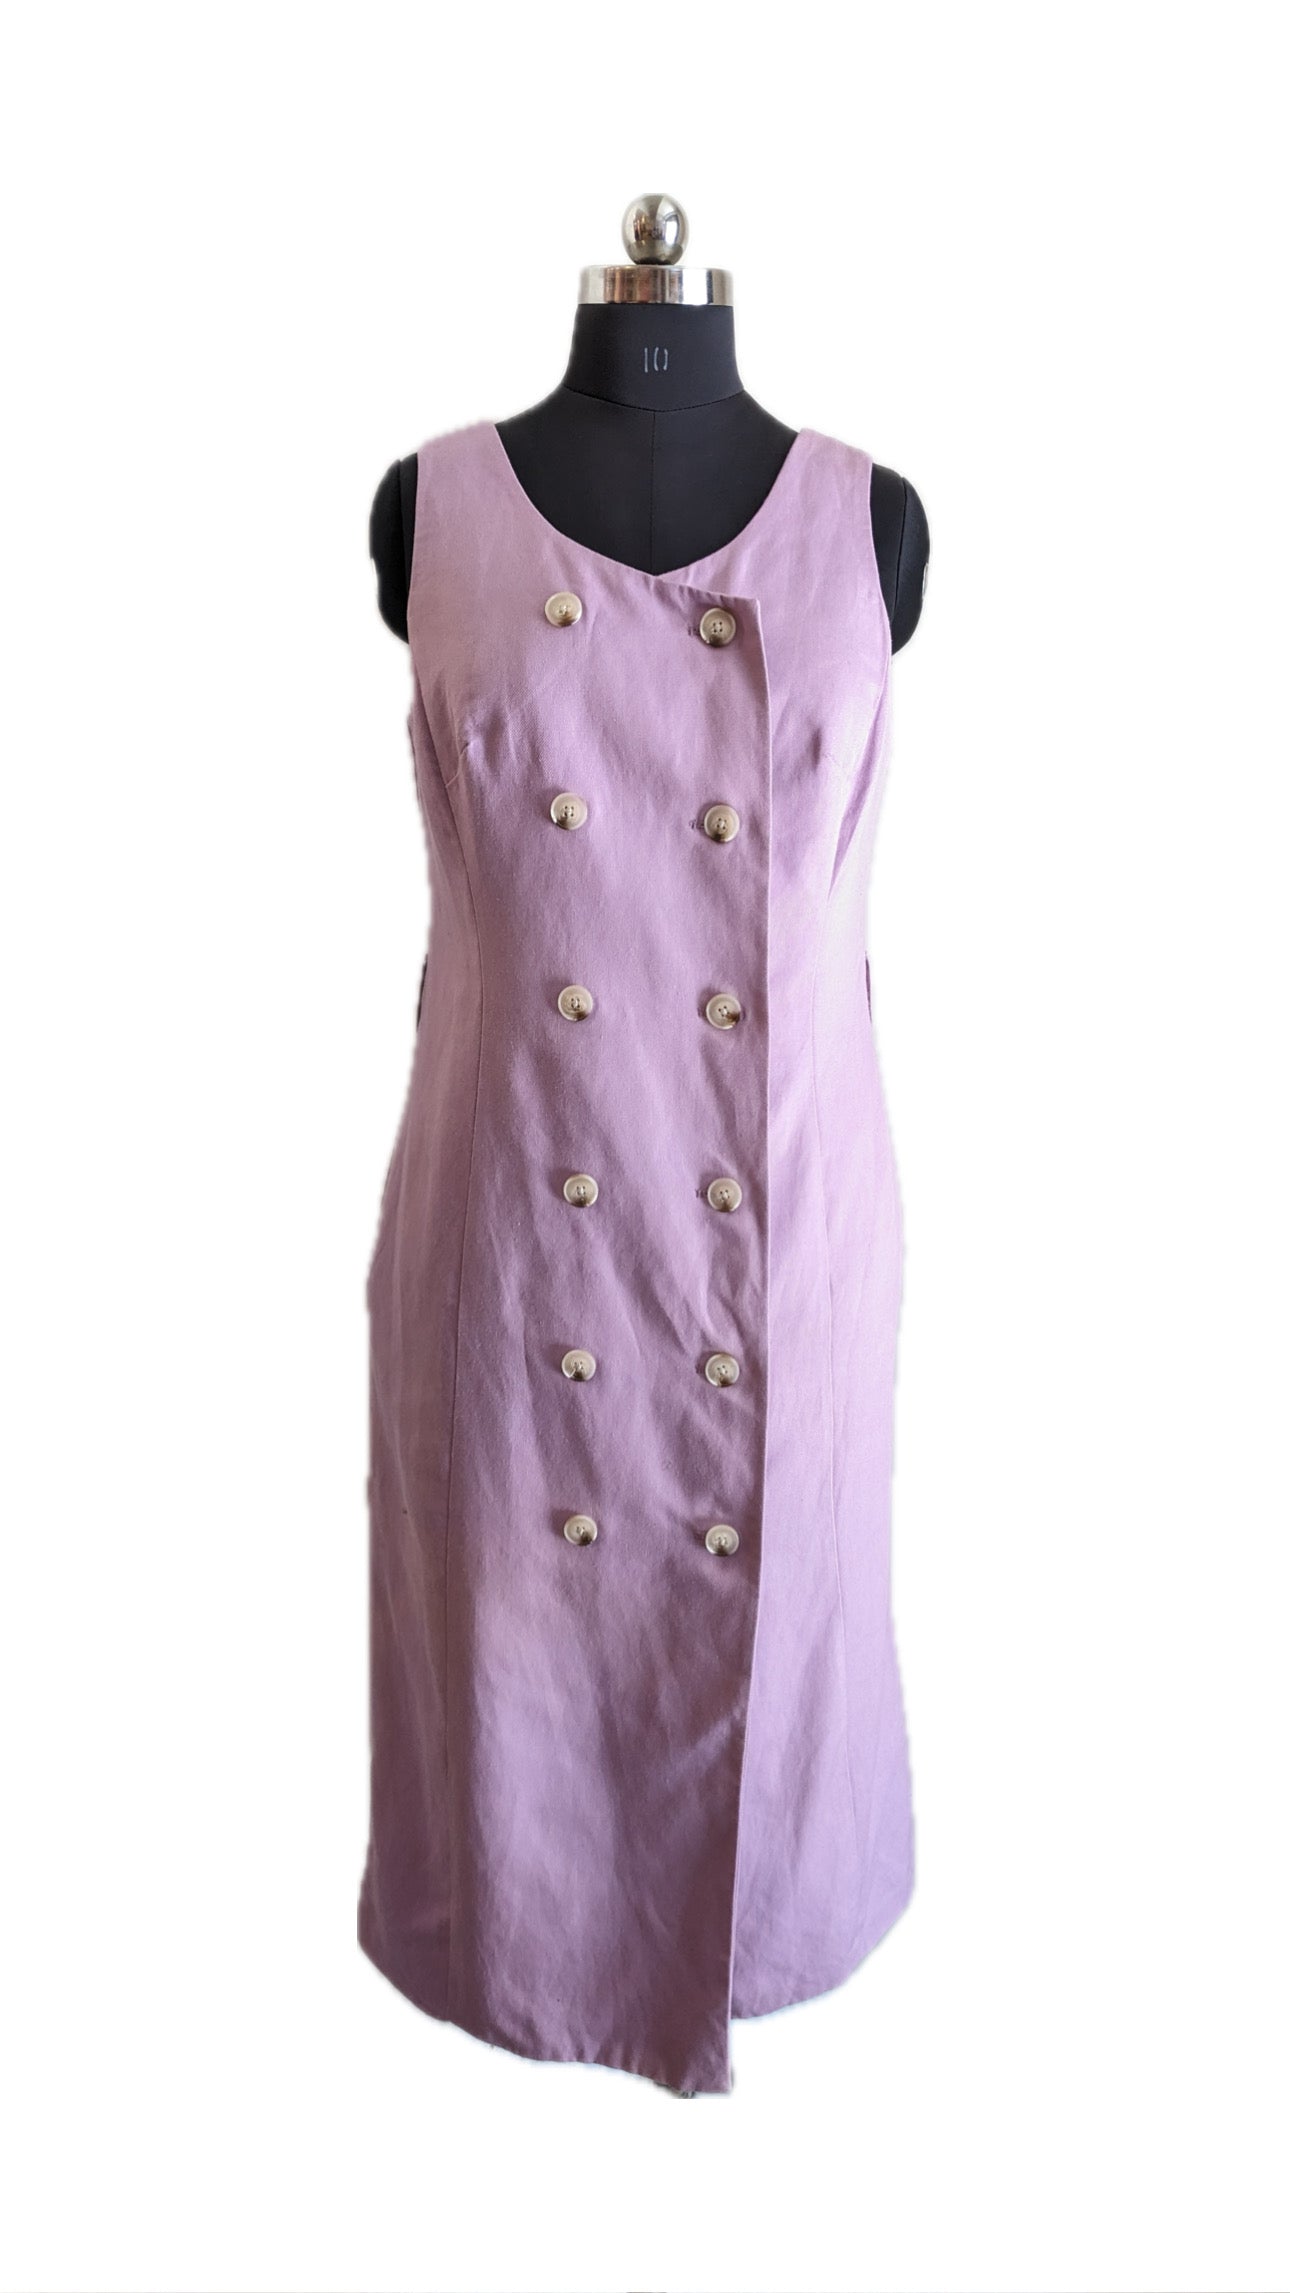 M&S Purple Dress